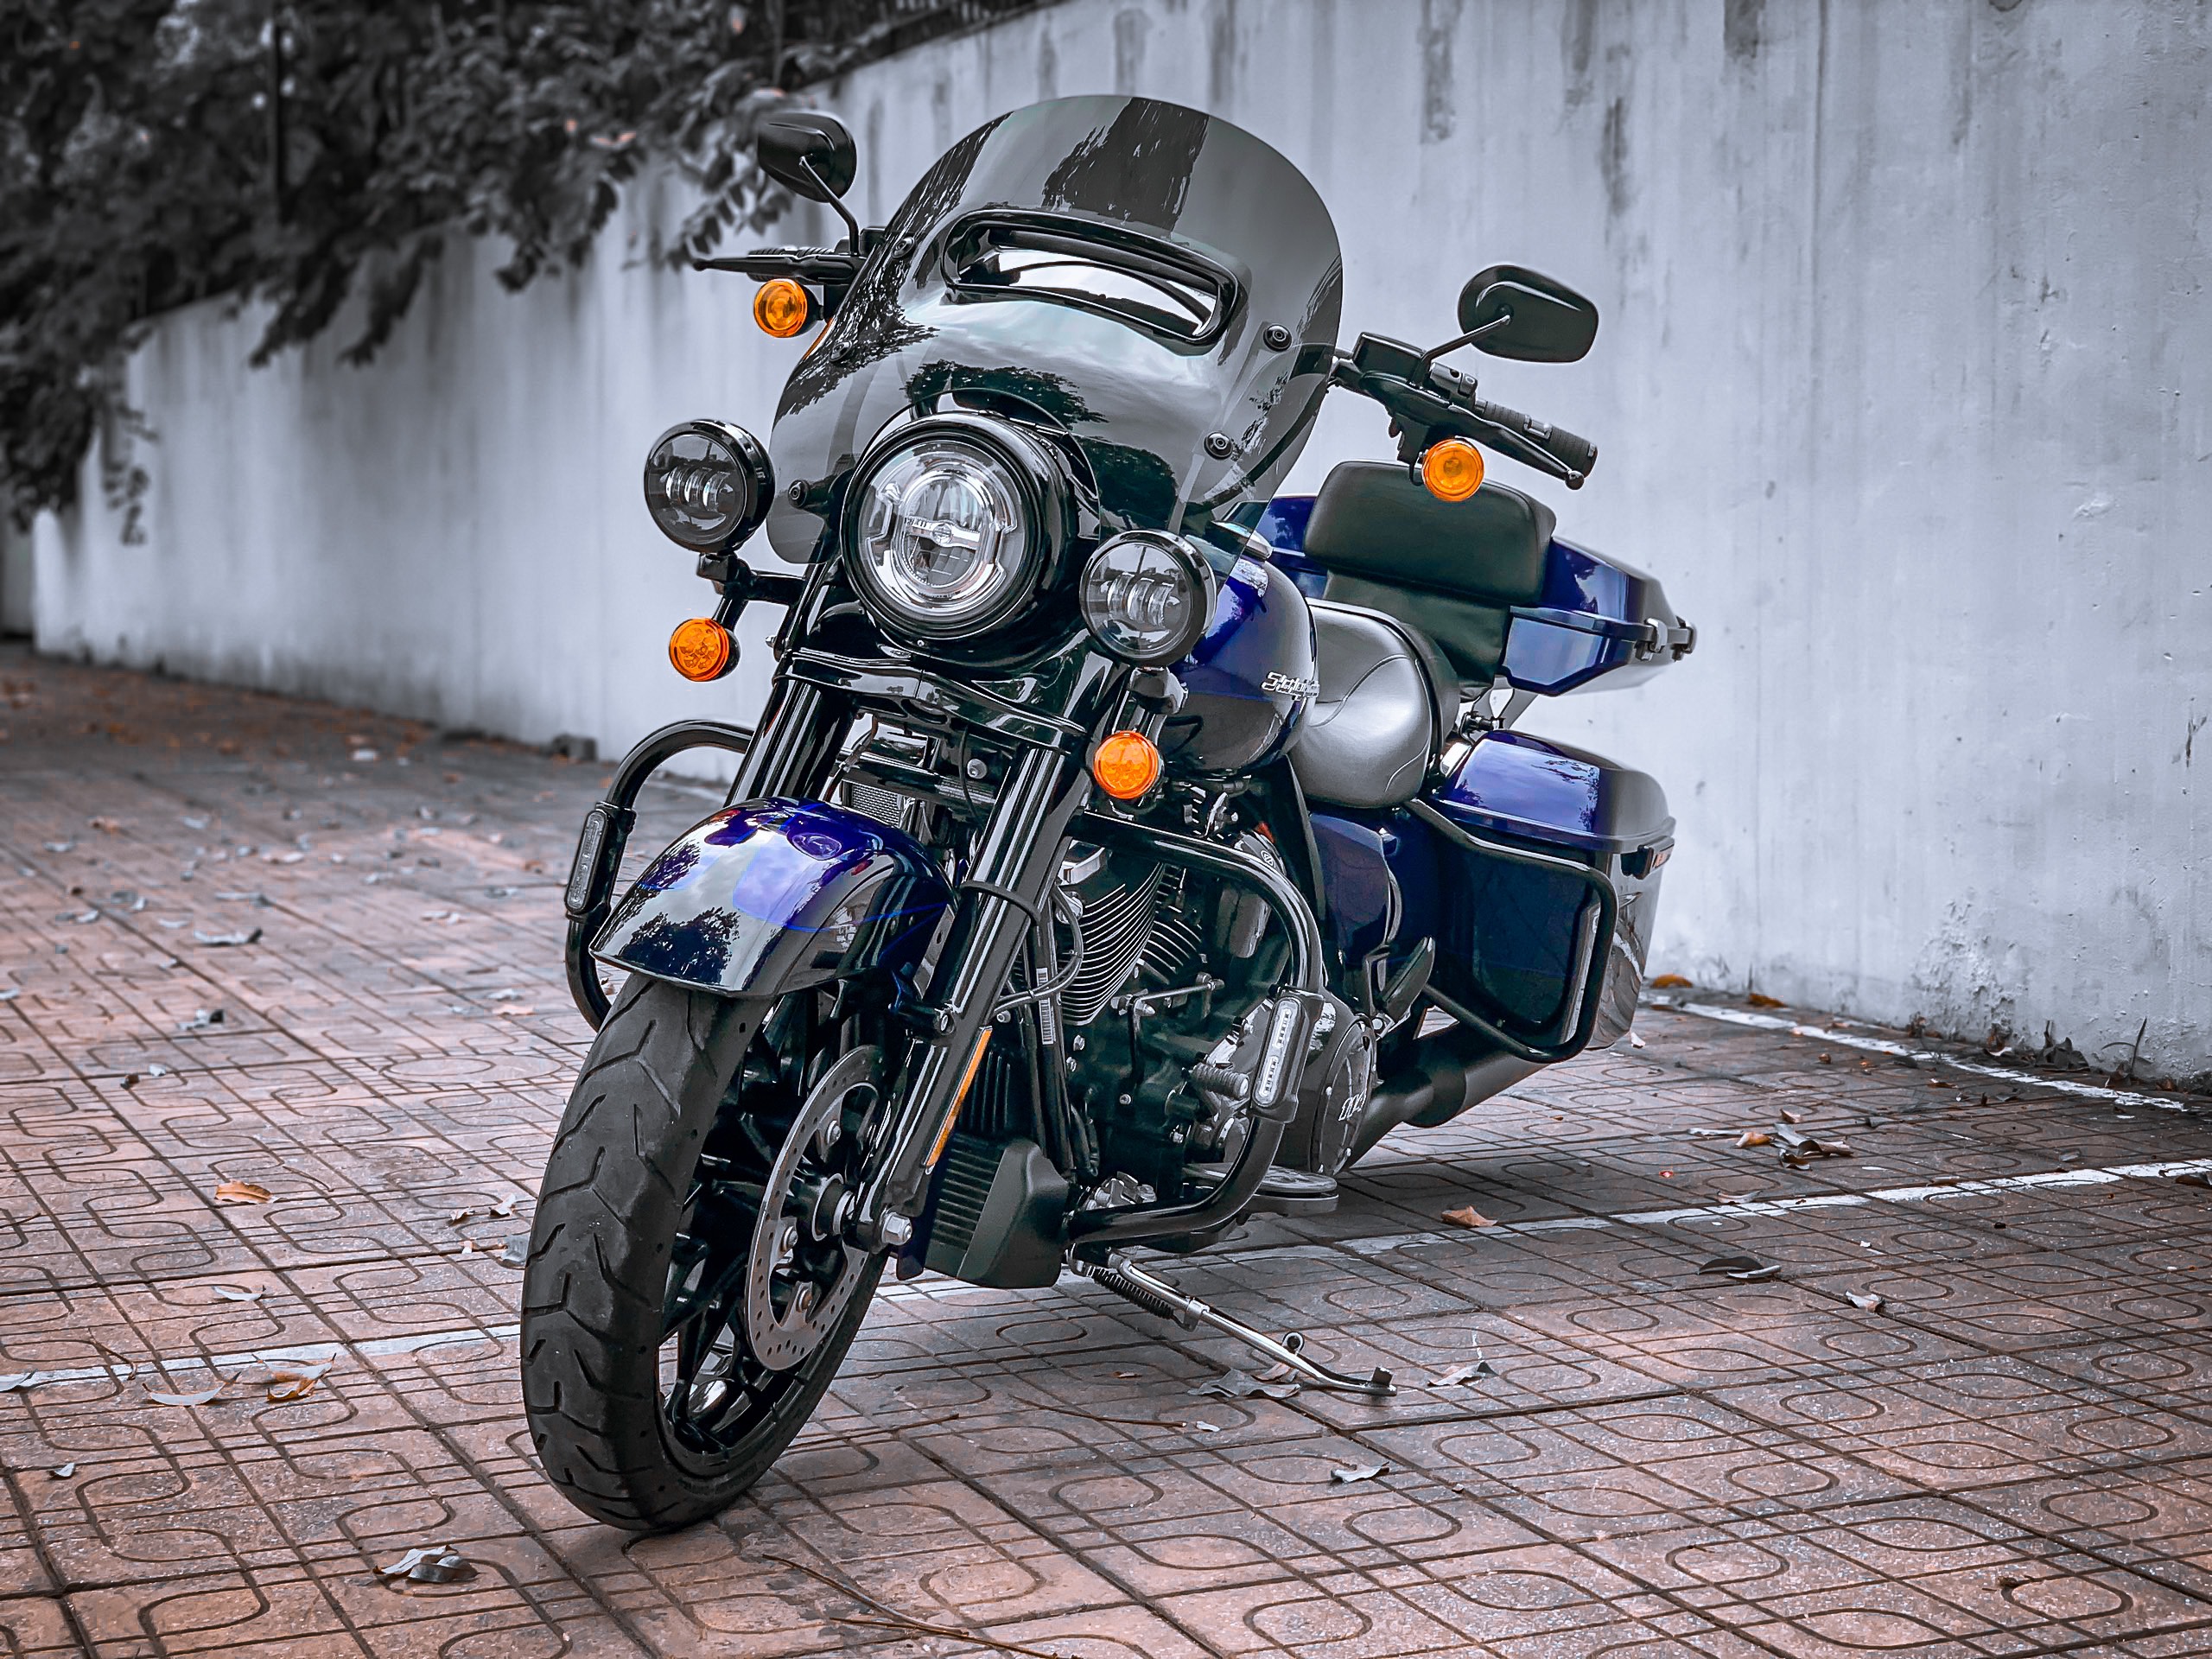 Harley Davidson RoadKing Special 2020